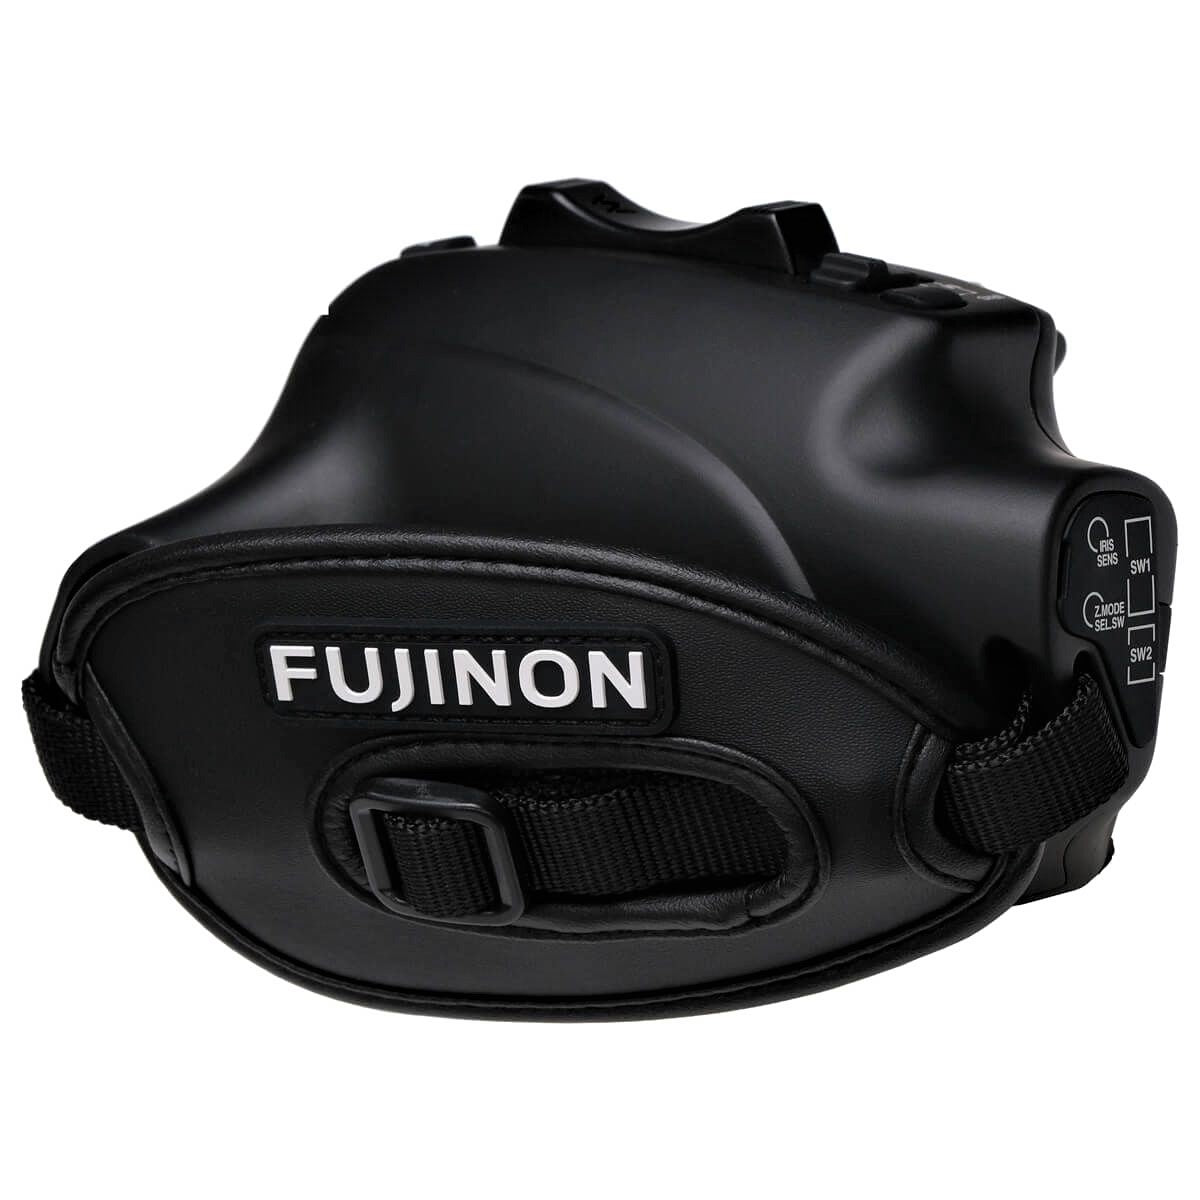 Fujinon HA23x7.6BERD-S10 2/3'' Premier Series Telephoto Zoom Lens with 2x Extender Grip